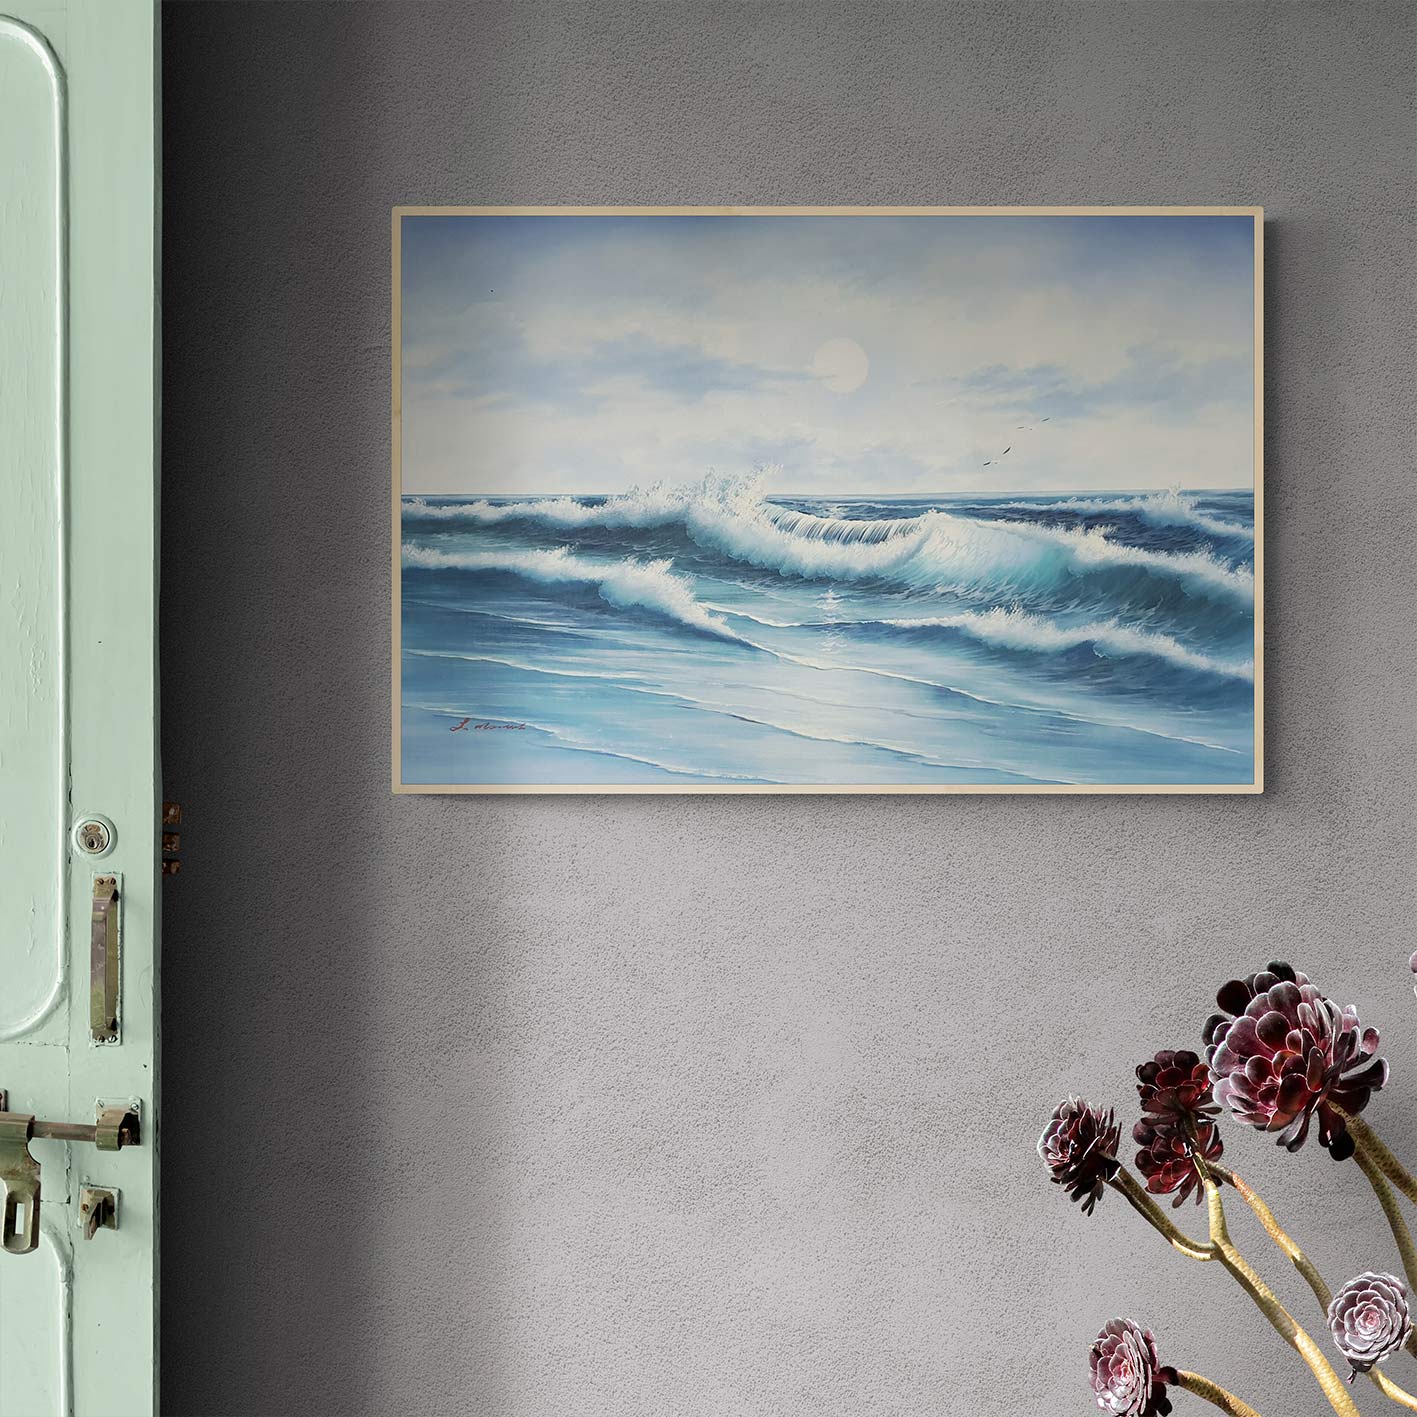 Rough Sea Painting 90x60 cm